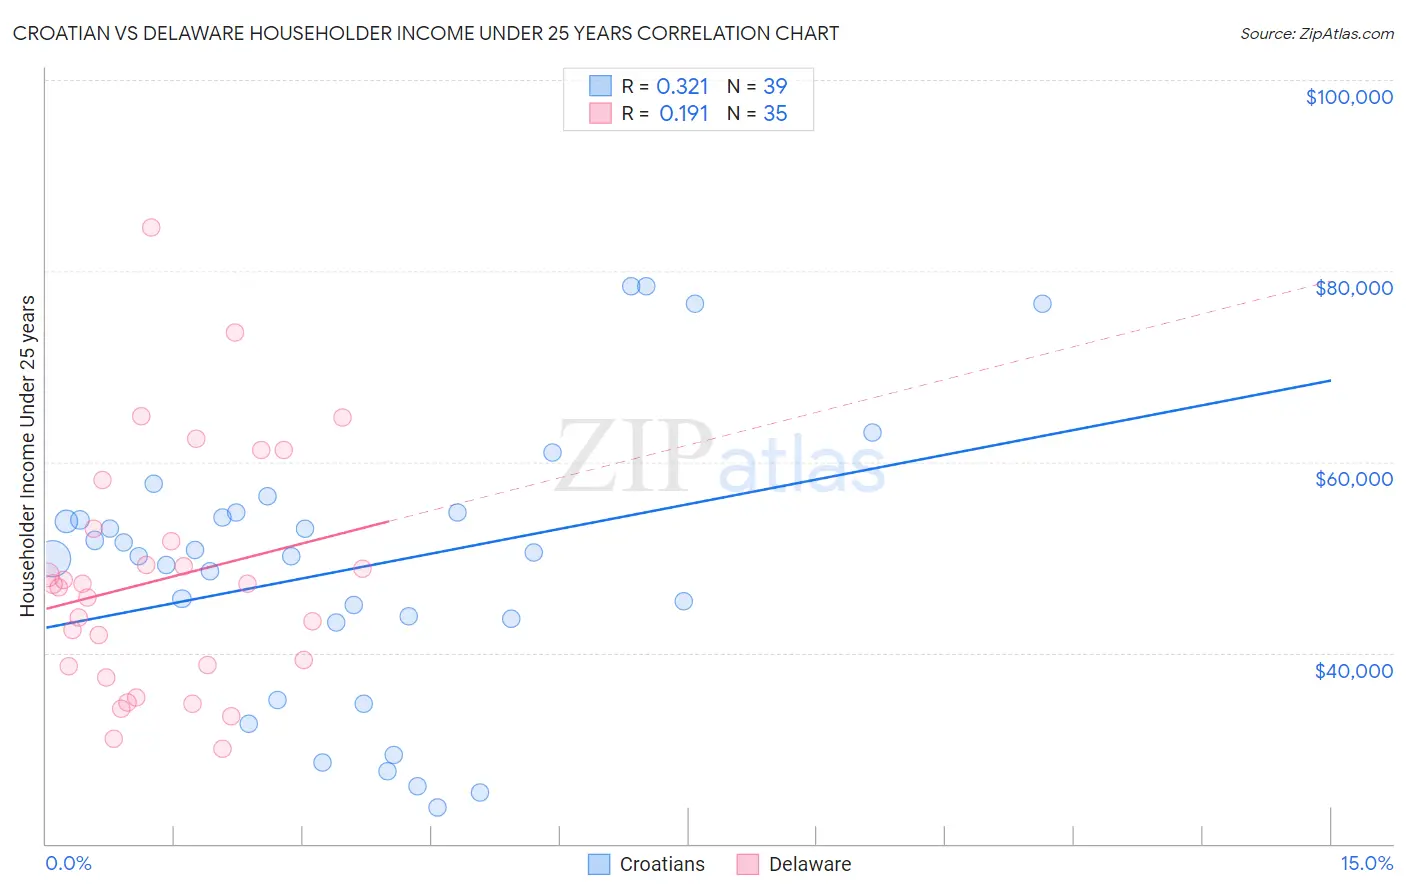 Croatian vs Delaware Householder Income Under 25 years